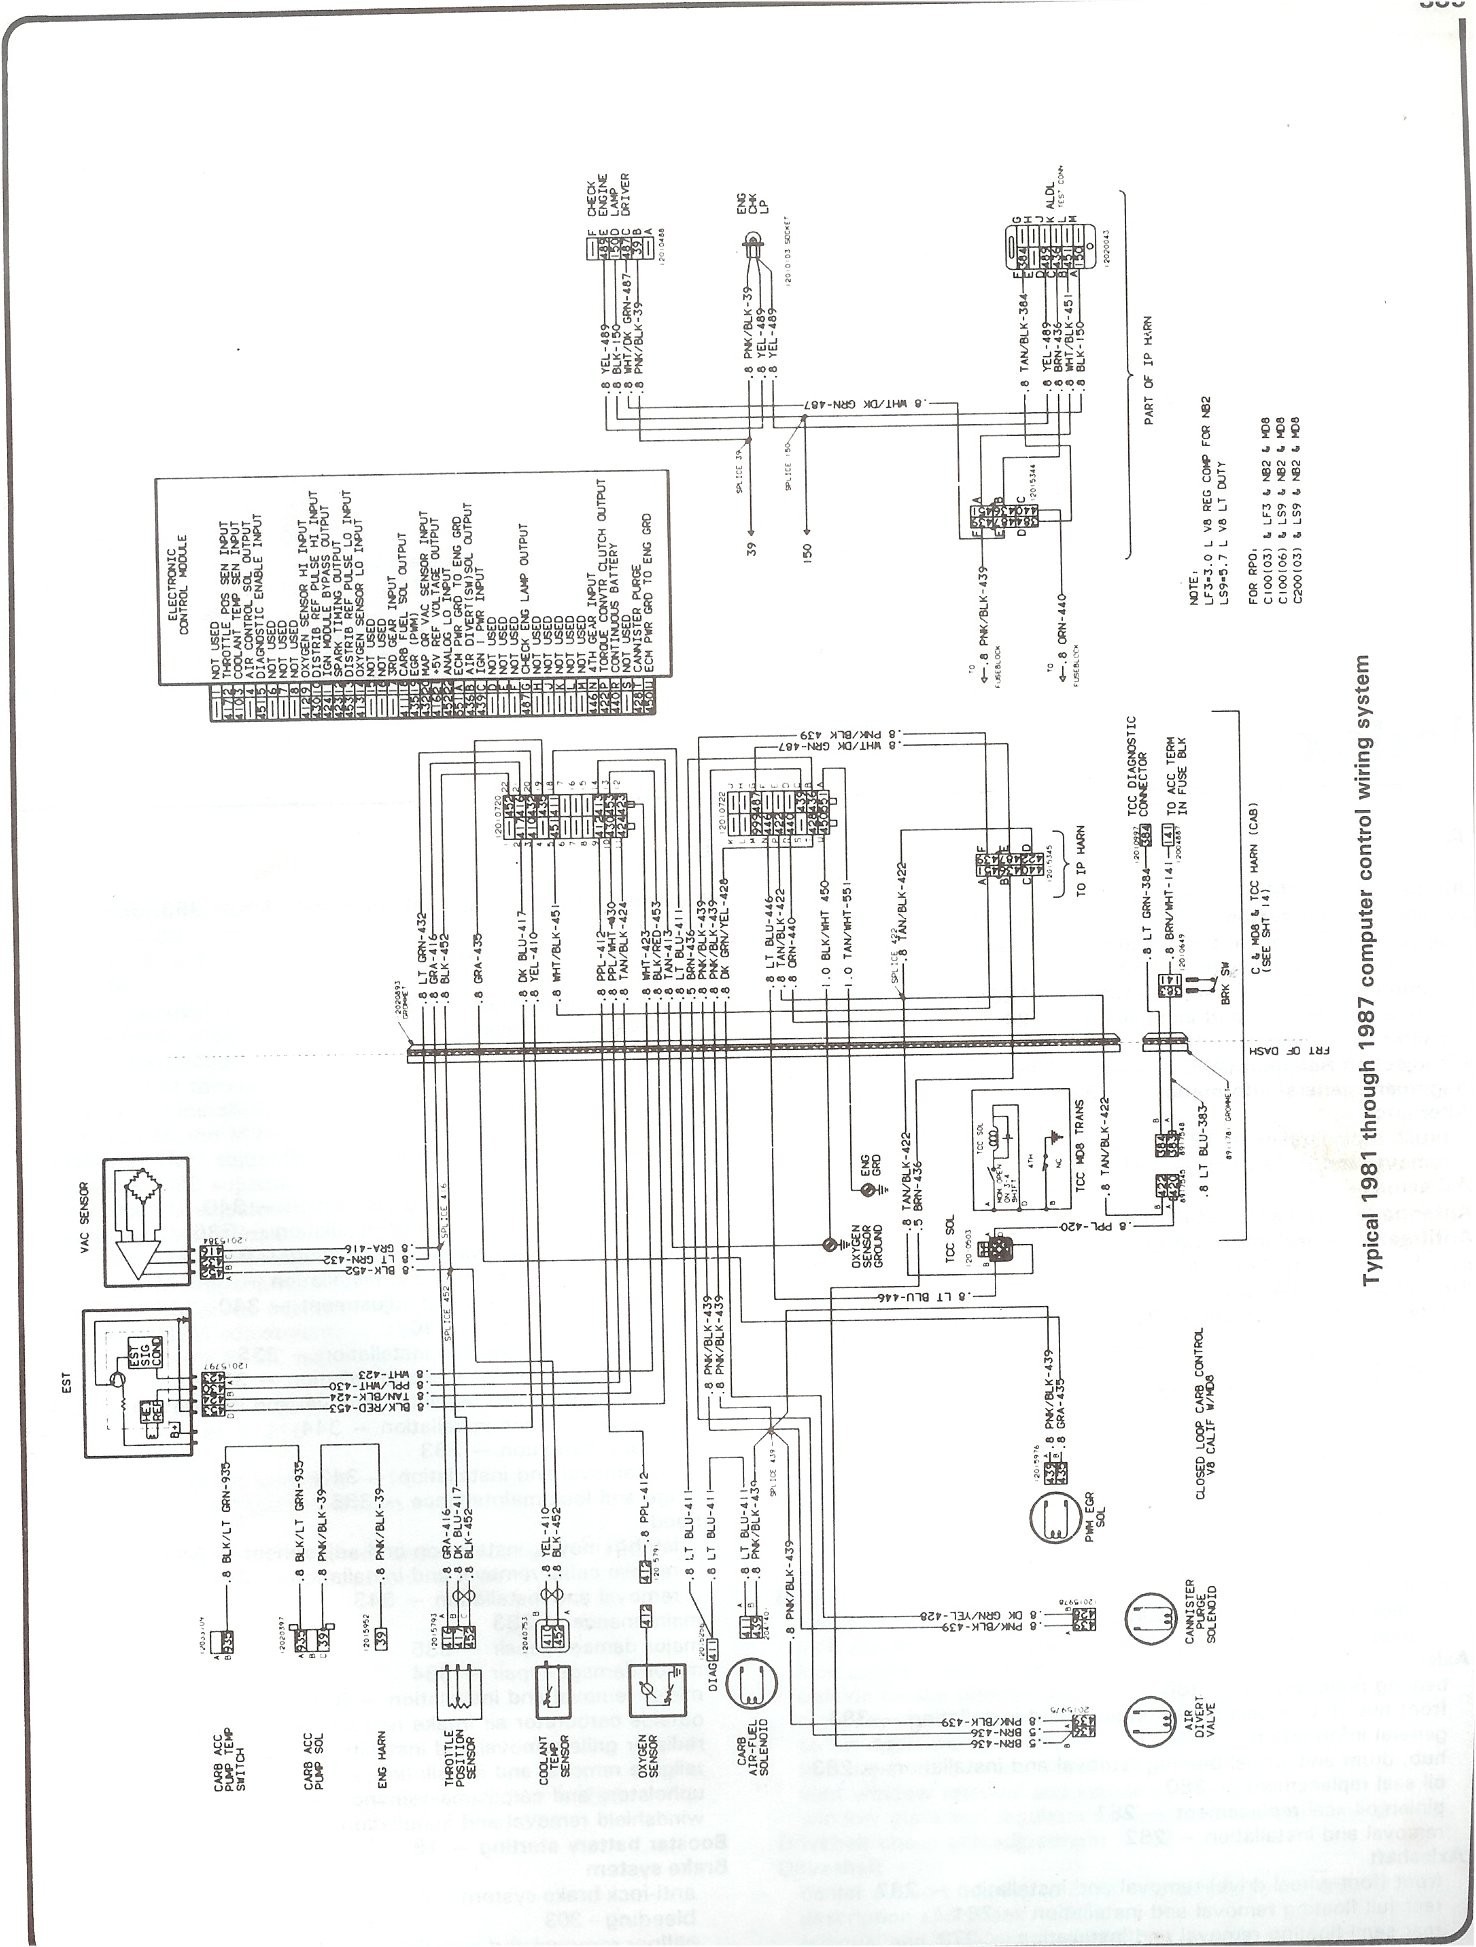 Chevy 350 Engine Diagram 83 Sbc Wiring Diagram Premium Wiring Diagram Design Of Chevy 350 Engine Diagram